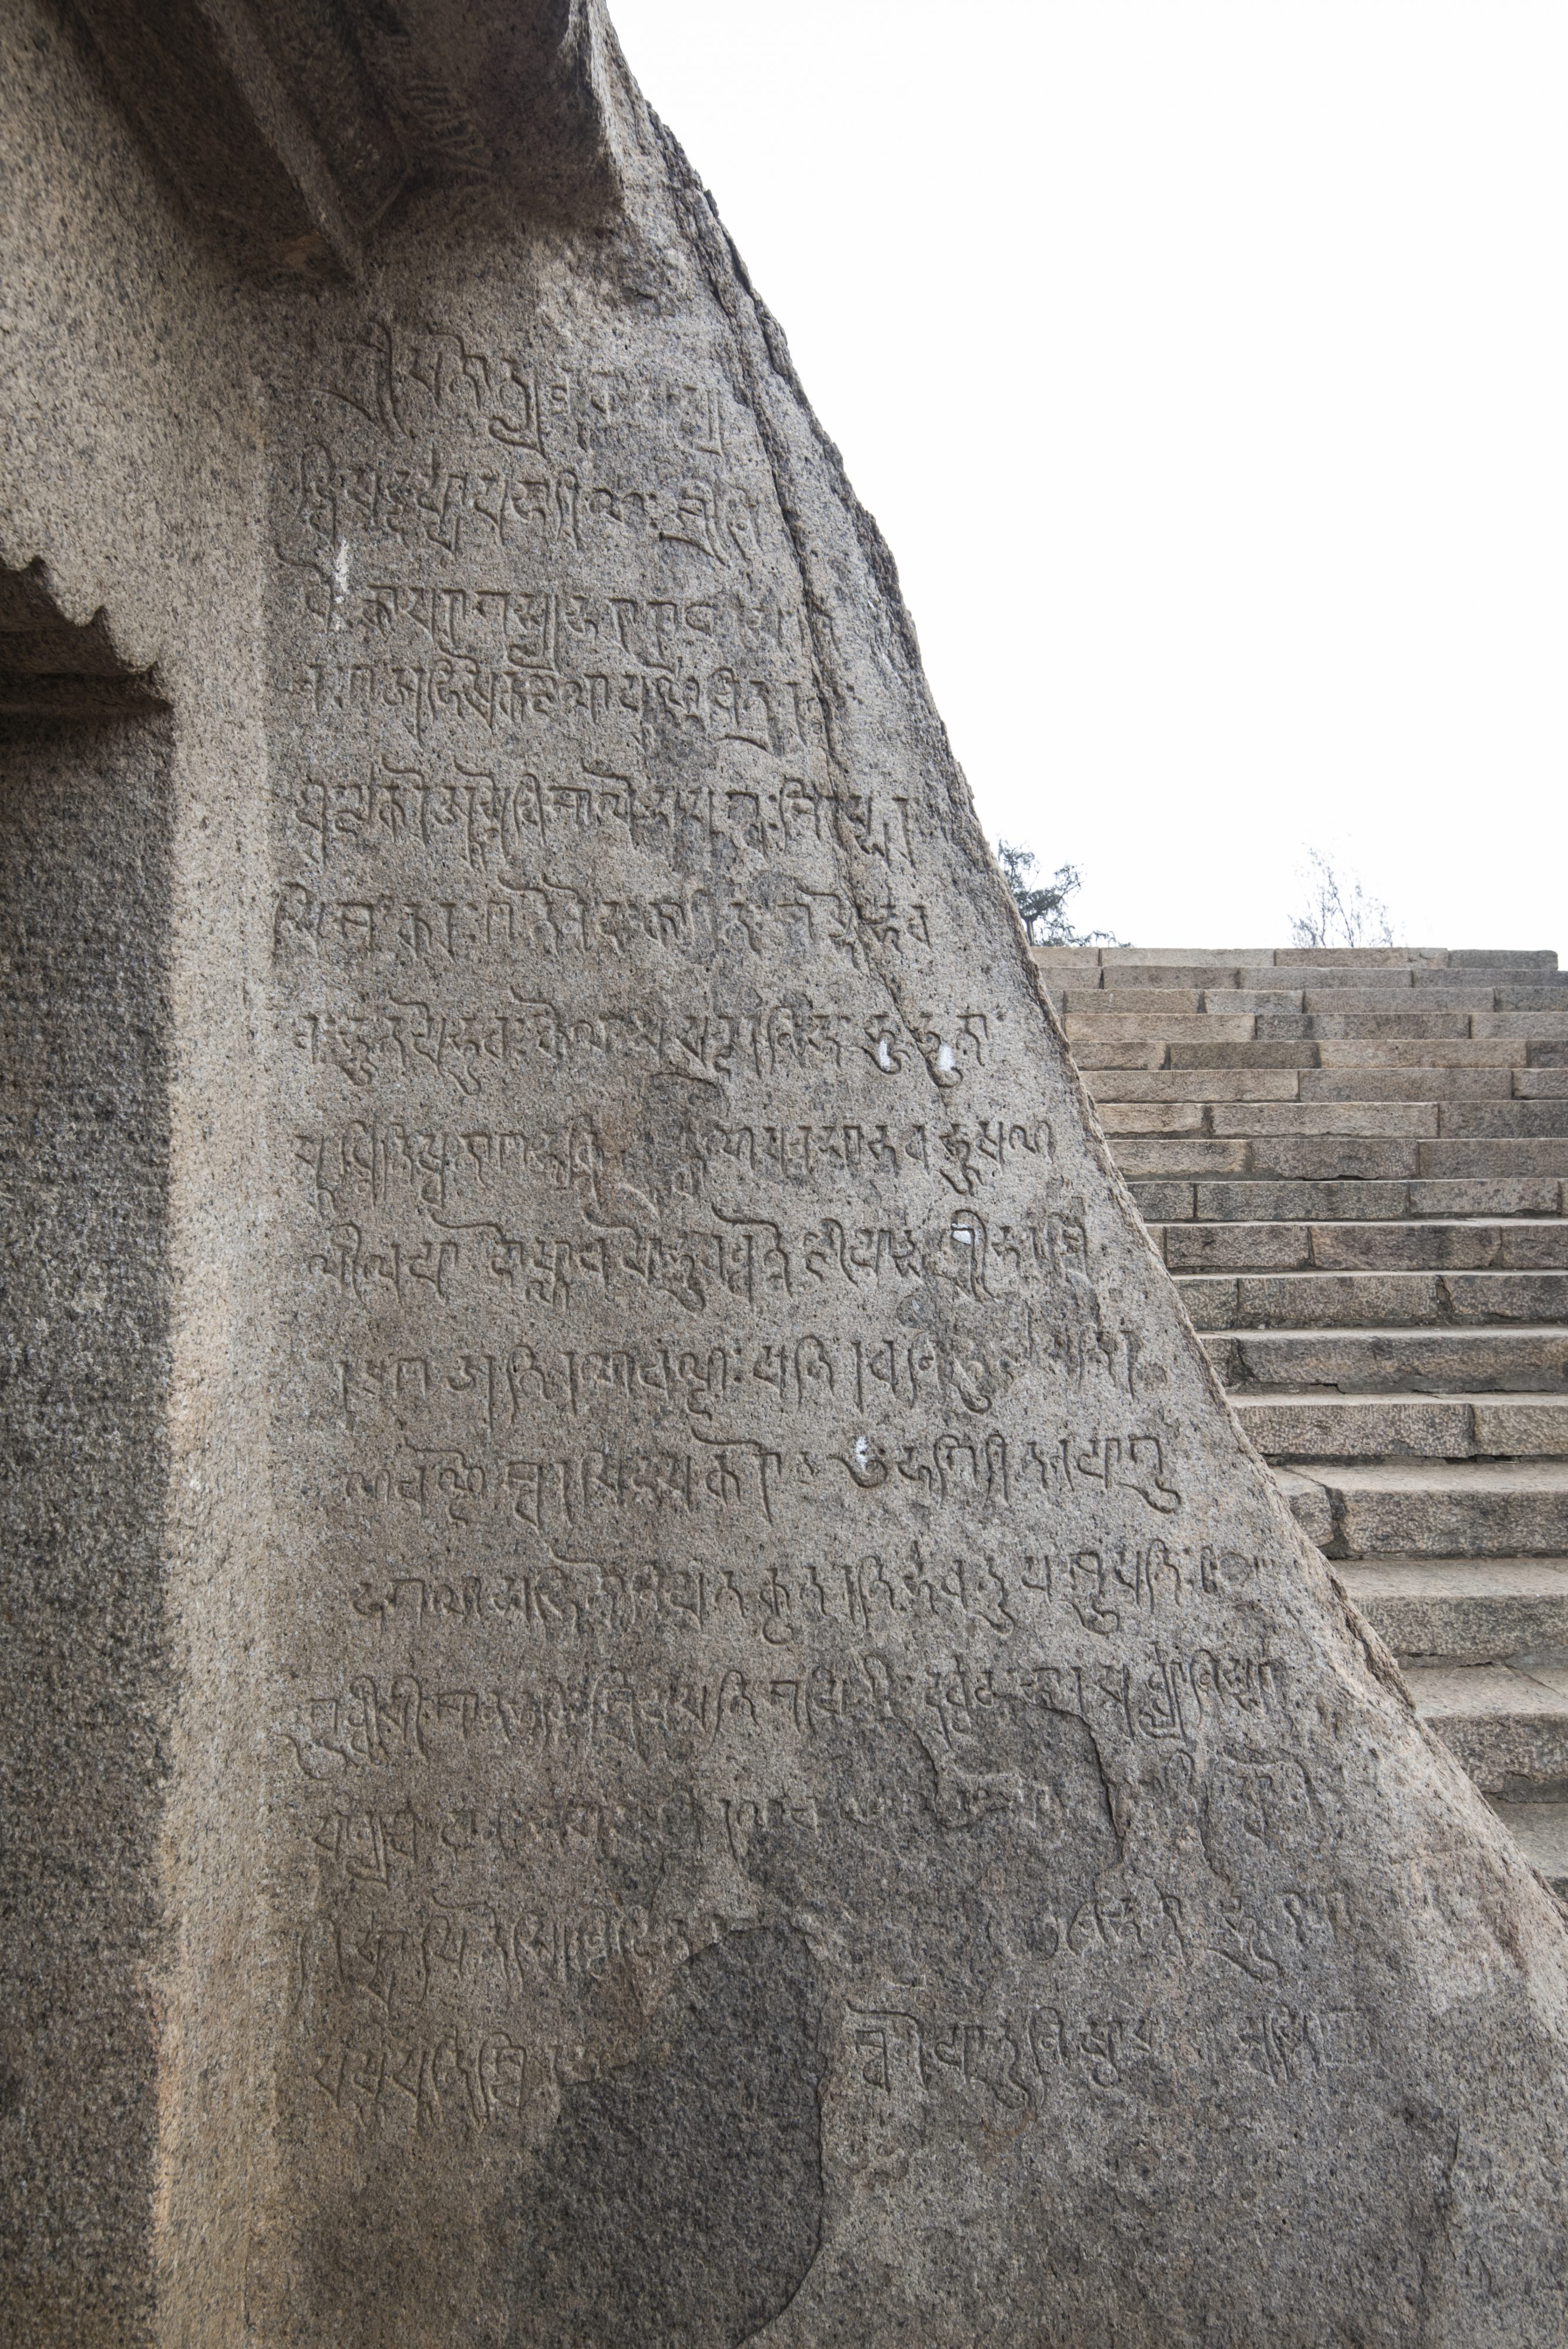 Inscription in Nagari Script (PC: Neetesh Photography)